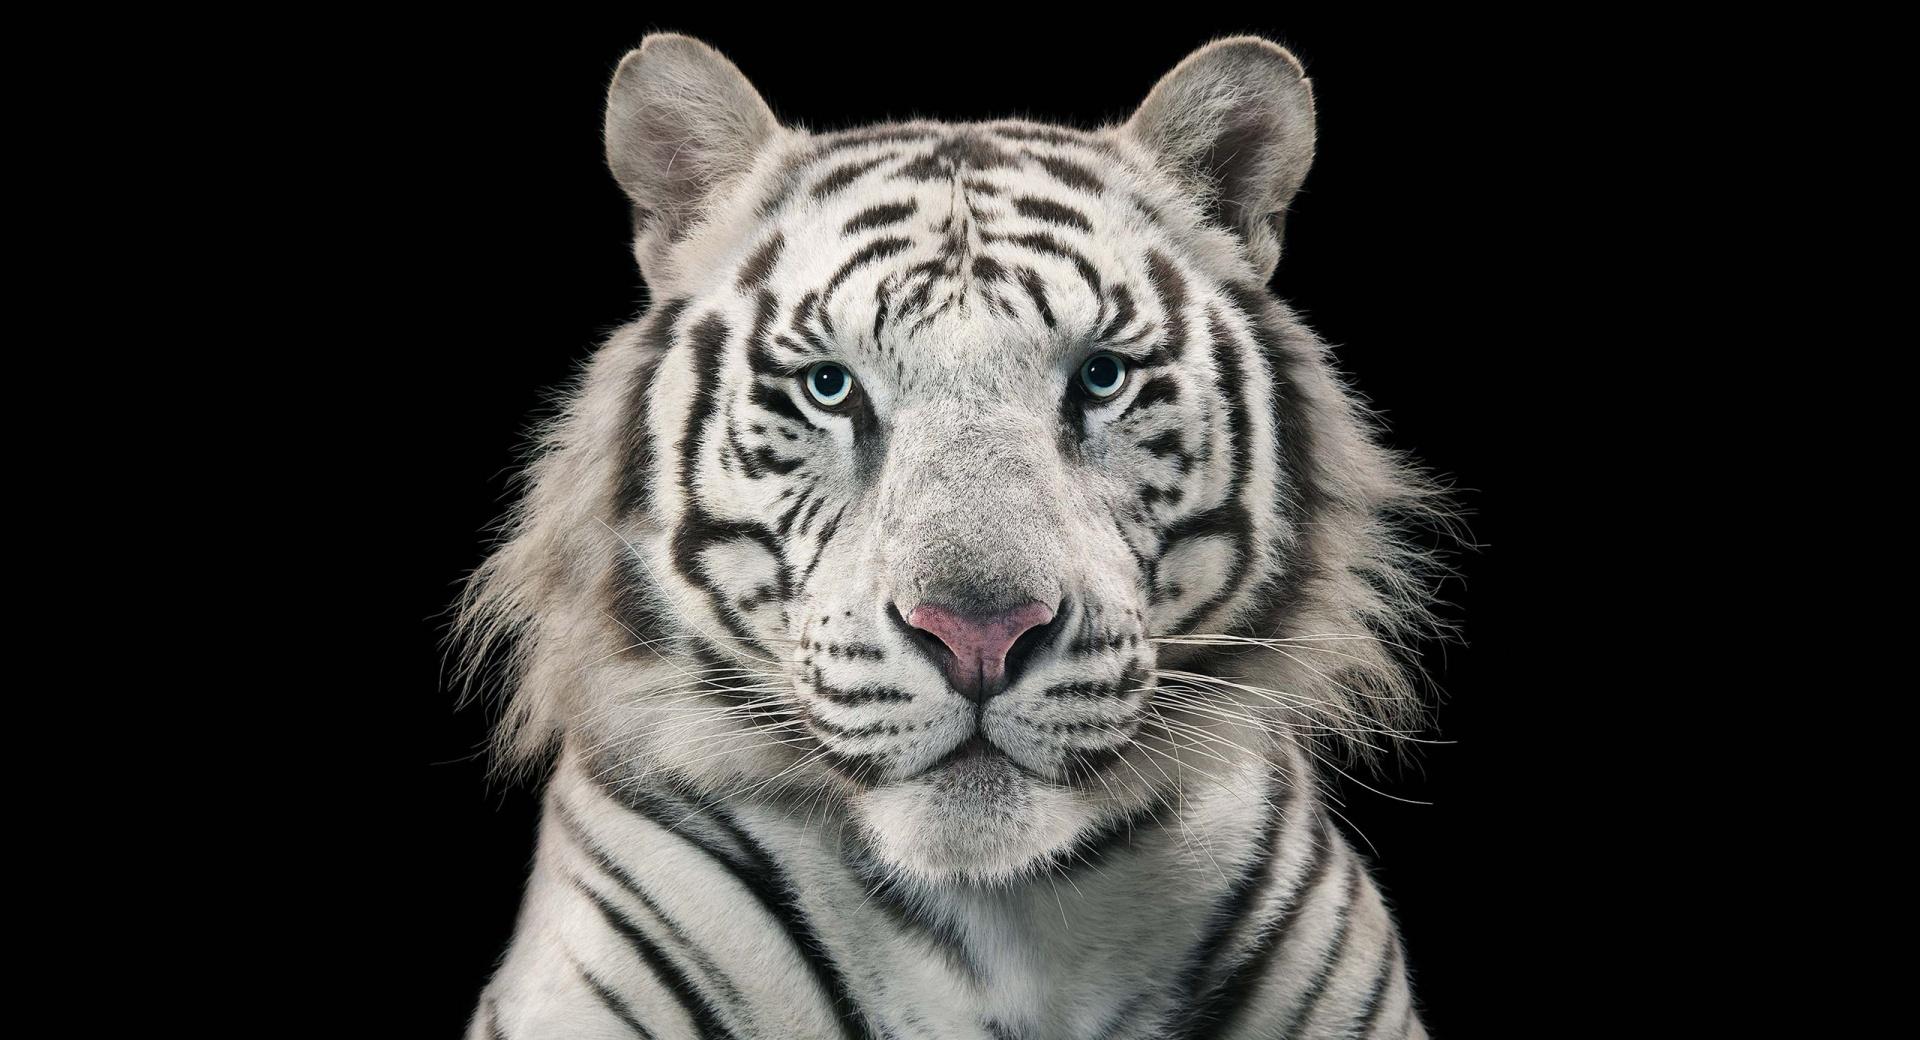 White Bengal Tiger 2048 x 2048 iPad wallpaper download